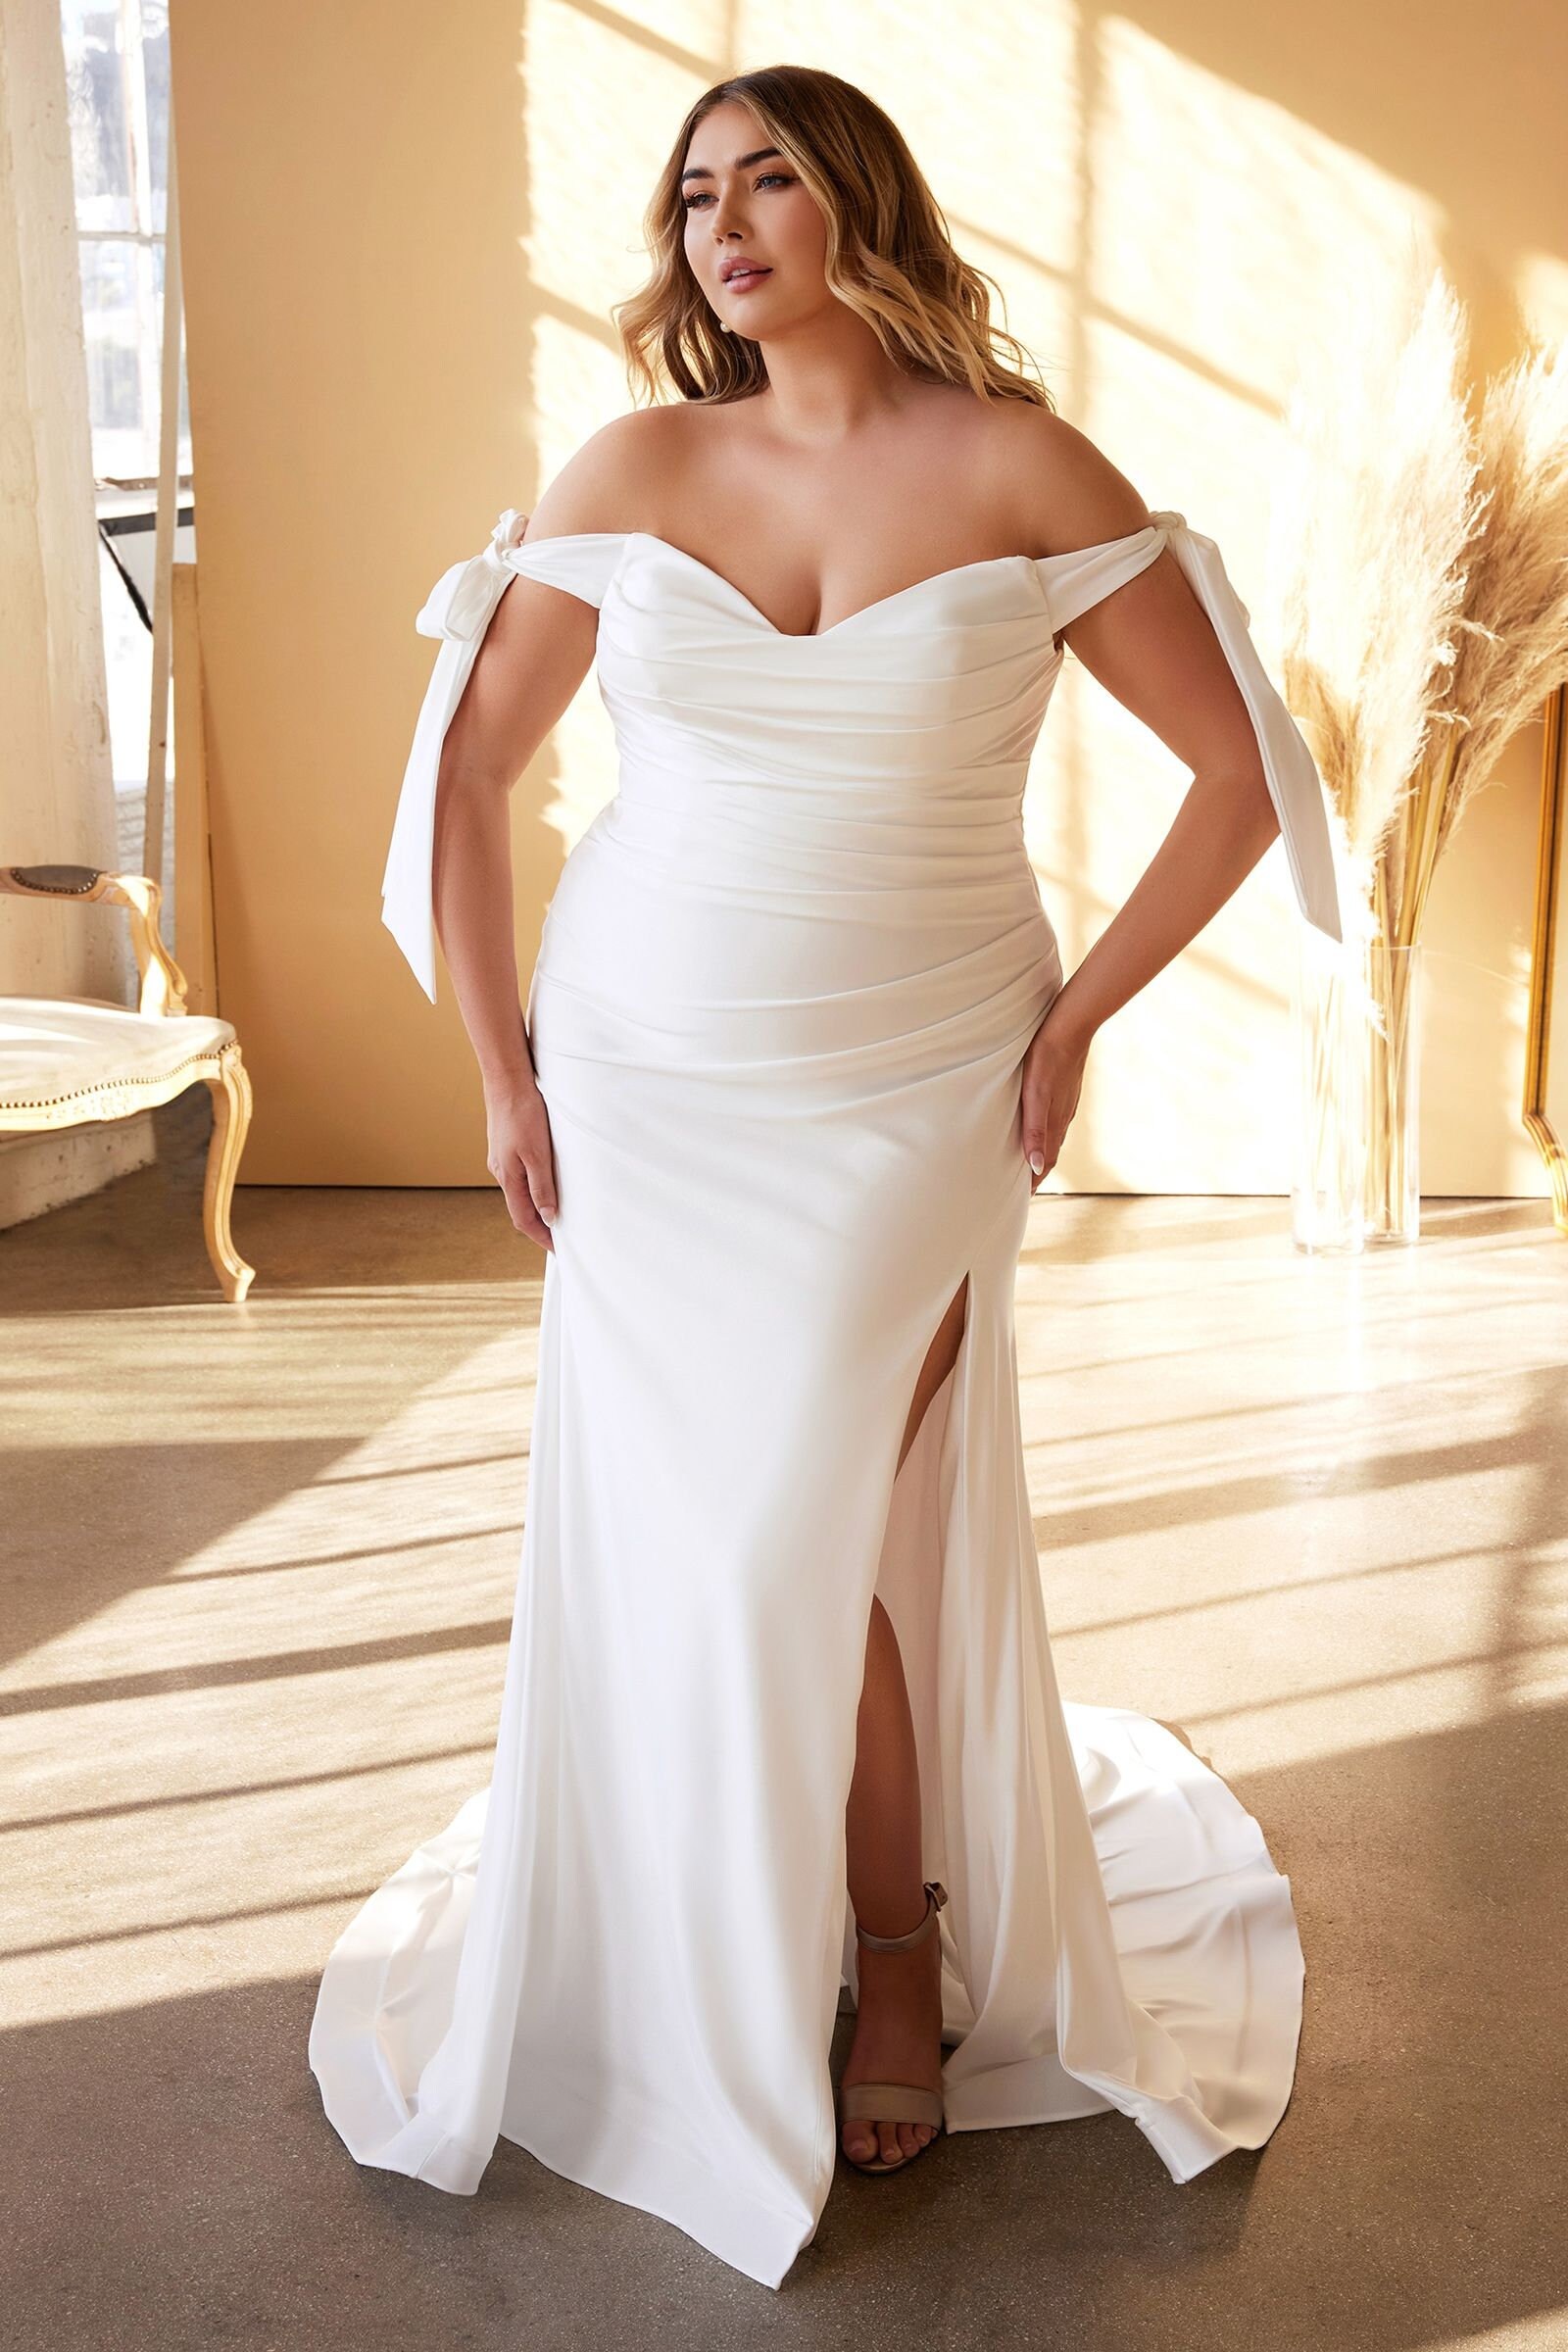 Beach Wedding Dress,a-line Bridal Gown With Long Train, Chiffon